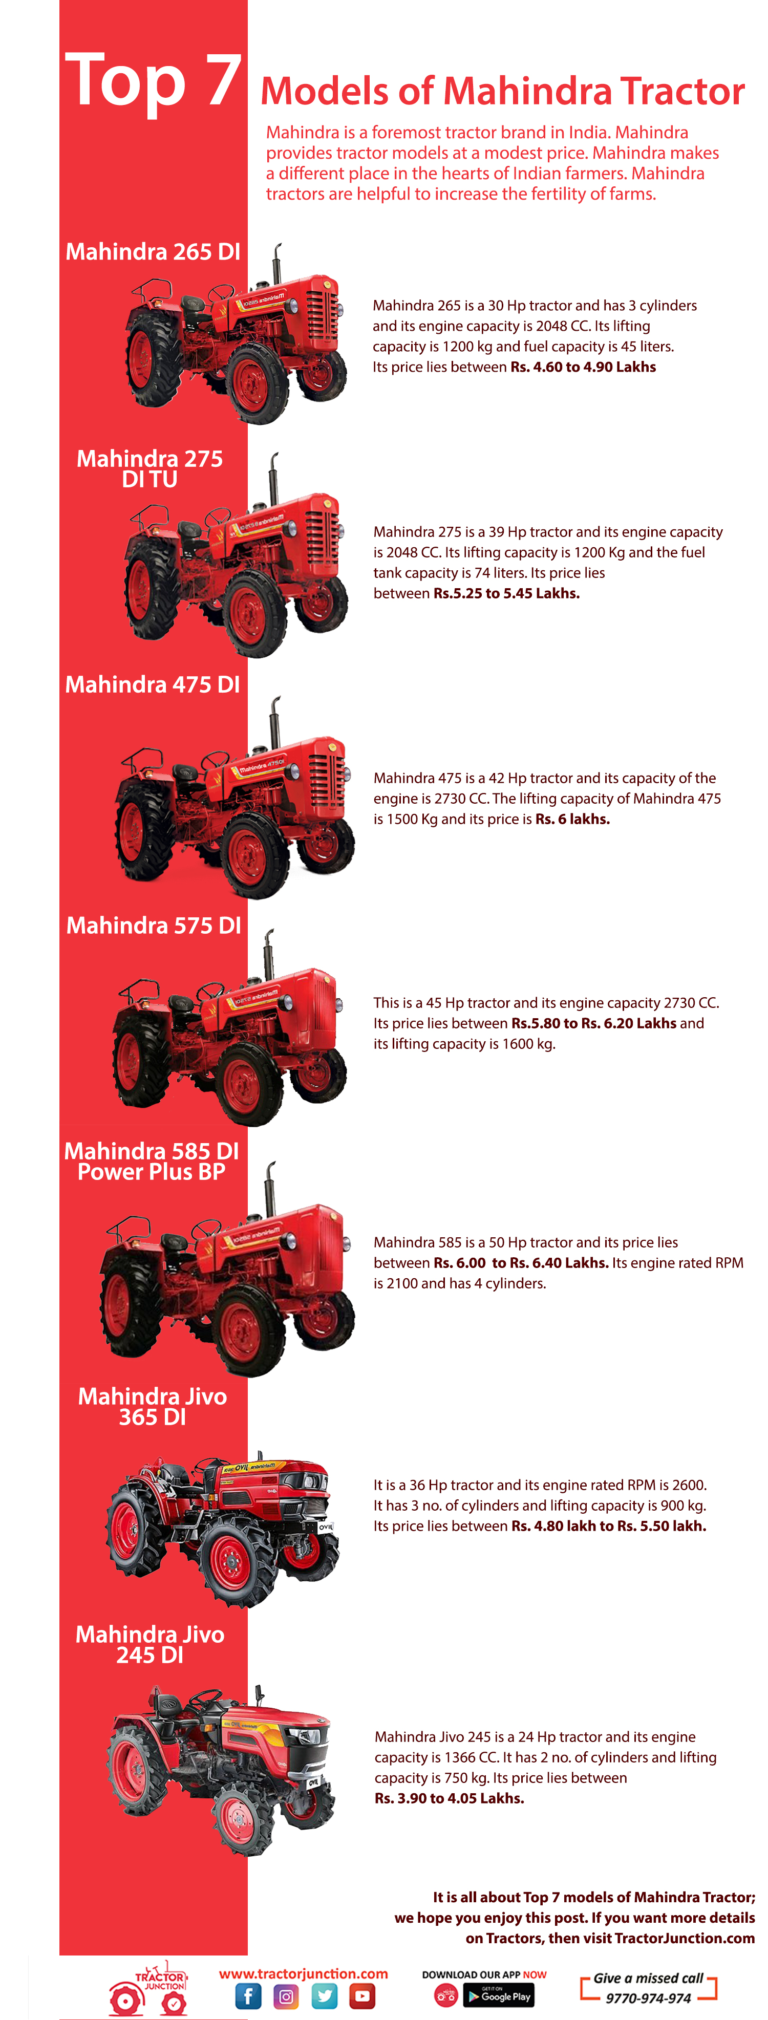 Top 7 Models of Mahindra Tractors - Infographic